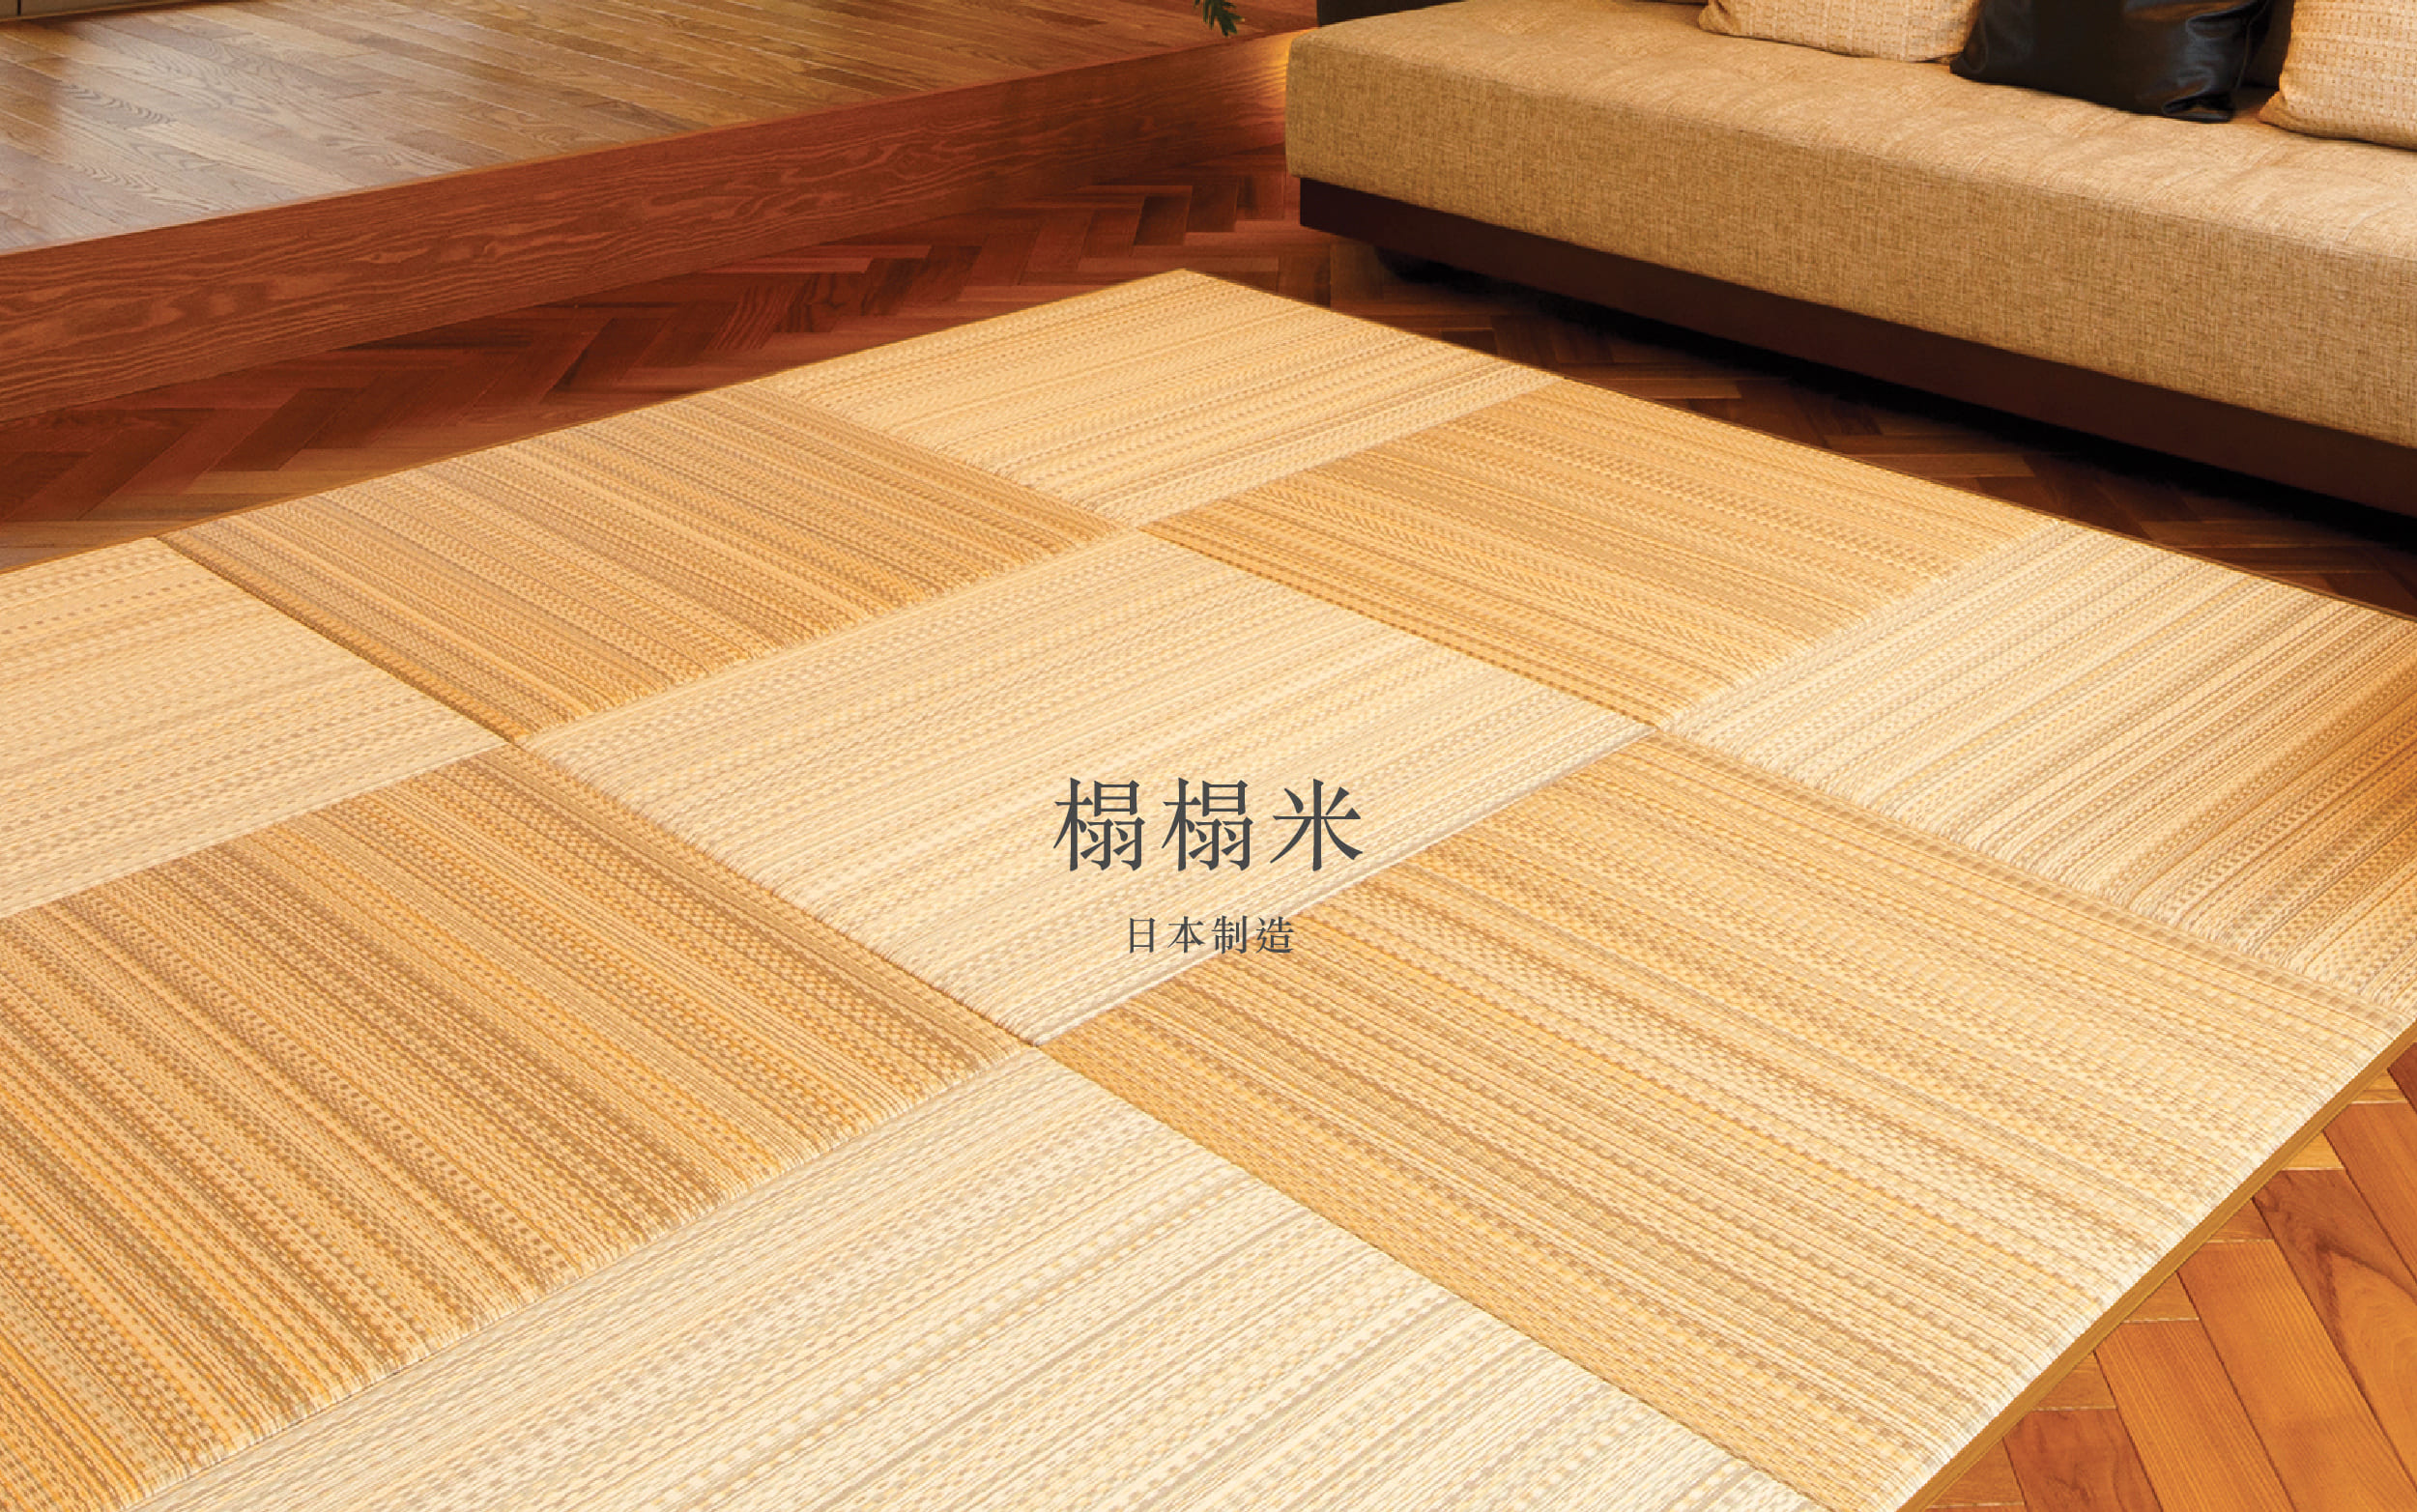 Tat Ming Flooring Tatami